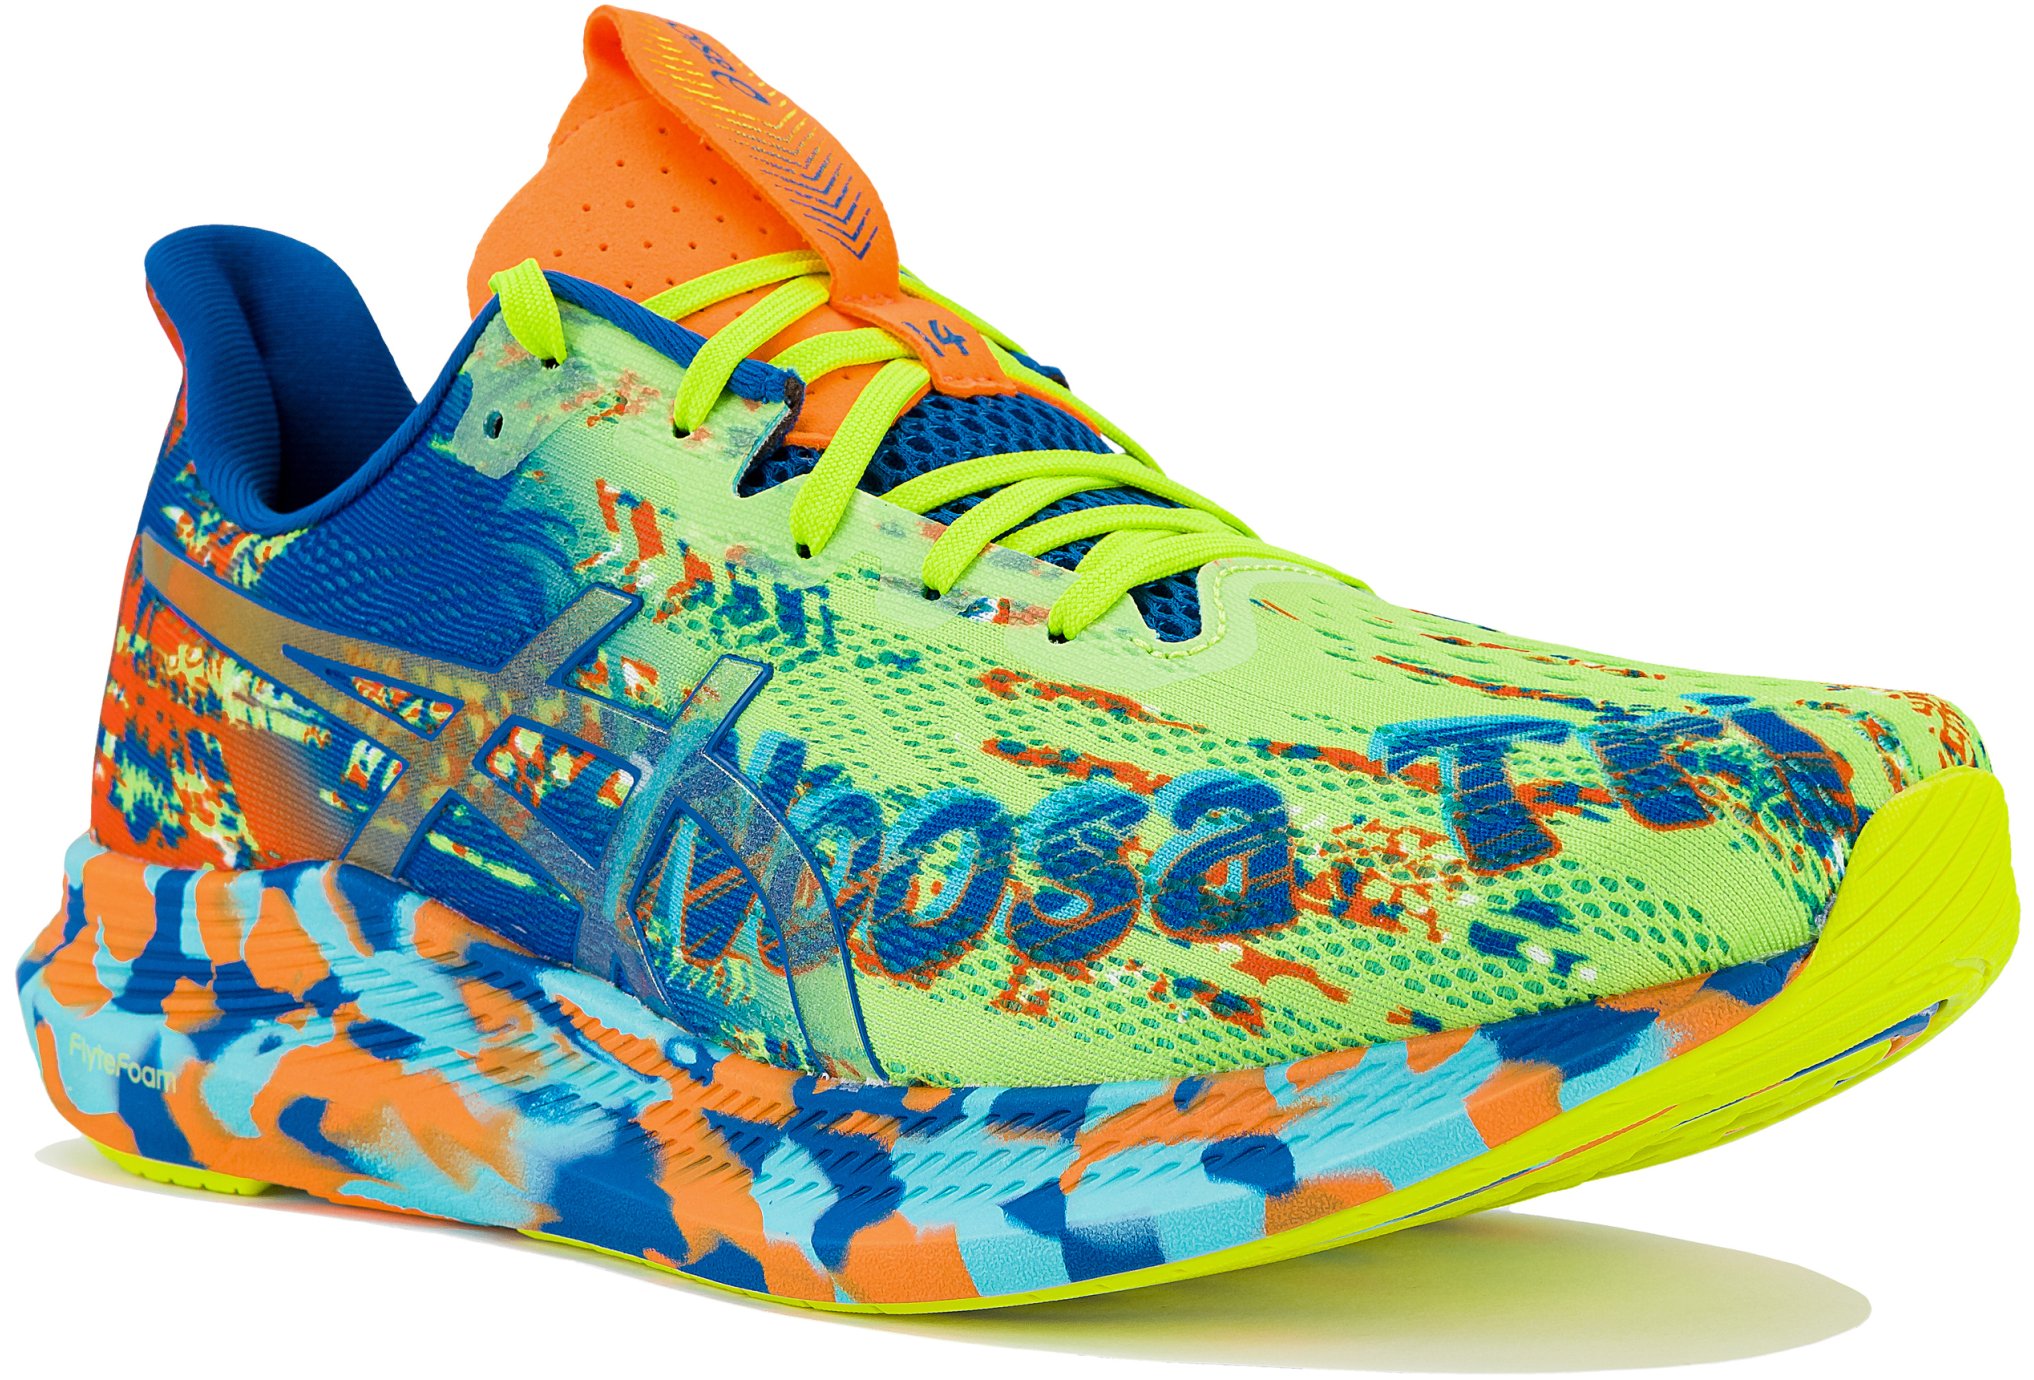 Noosa Tri 14 Femme Asics - Chaussures de running et triathlon